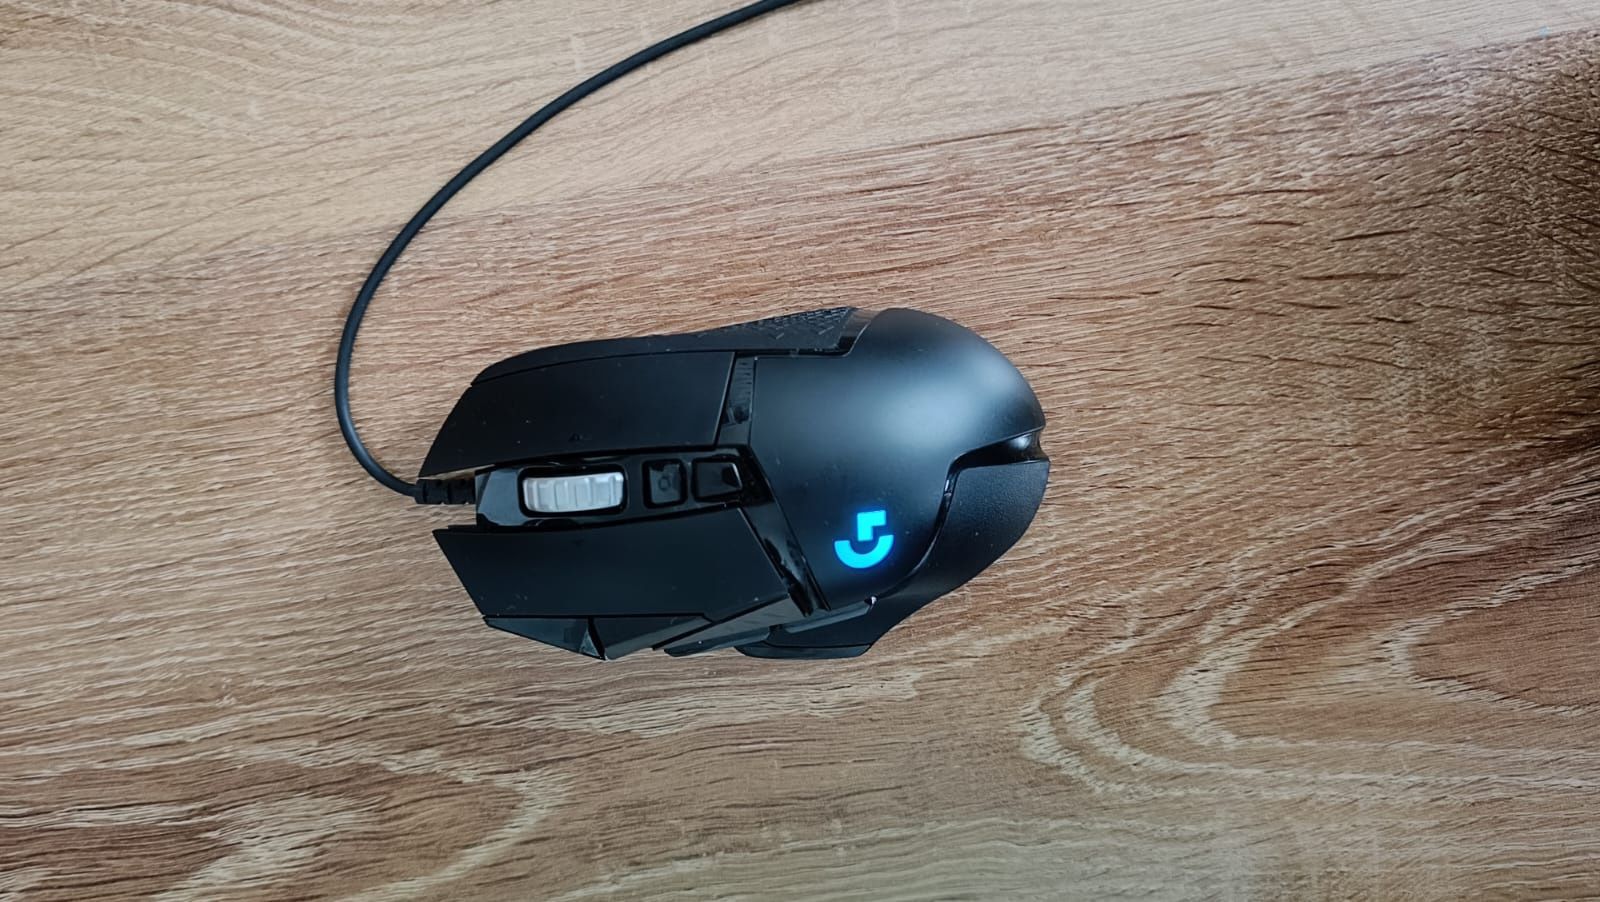 Mysz gamingowa Logitech G502 rachunek, gwarancja super stan